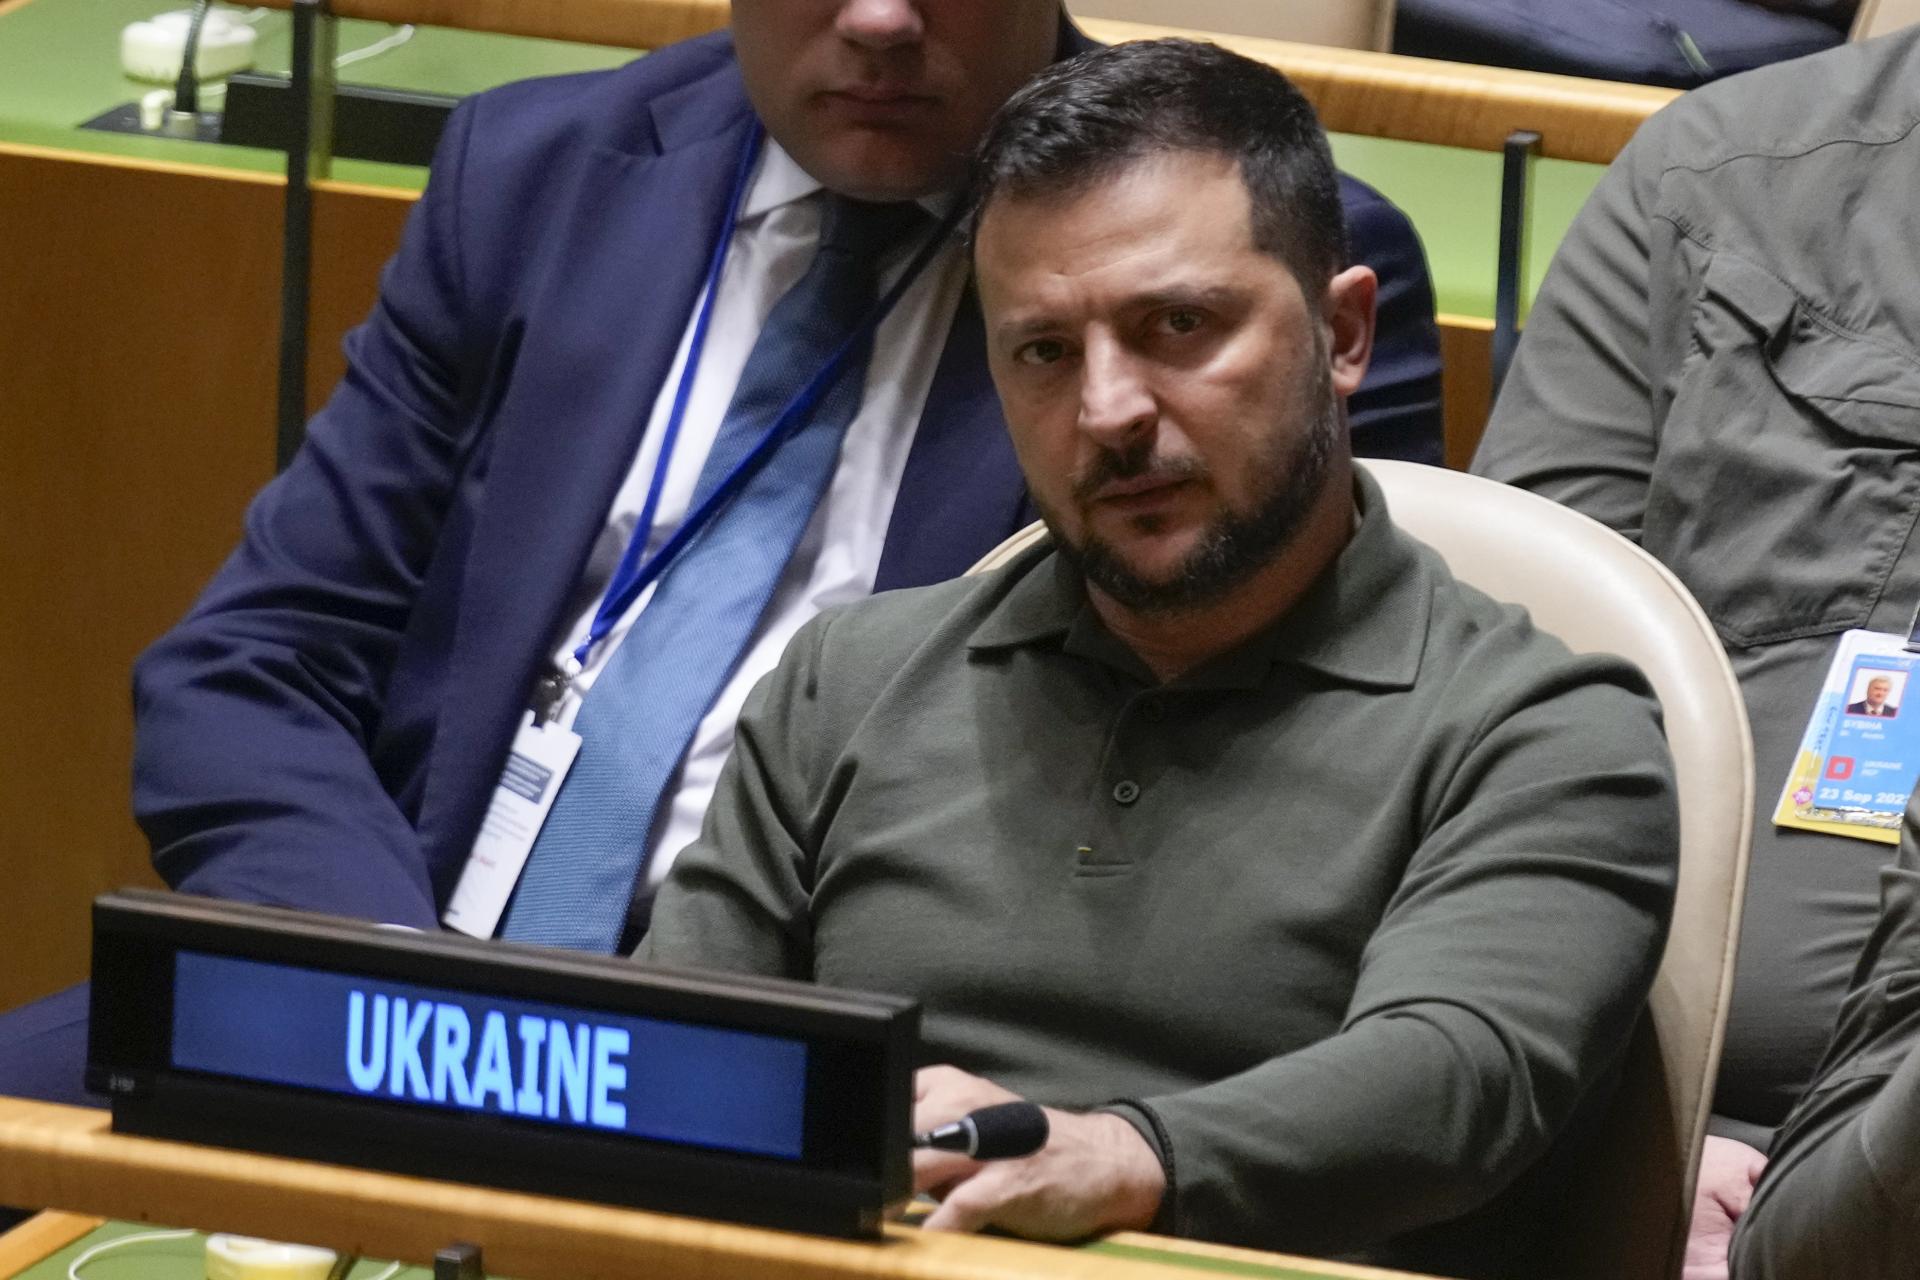 Rusko sa únosmi ukrajinských detí dopúšťa genocídy, tvrdí Zelenskij